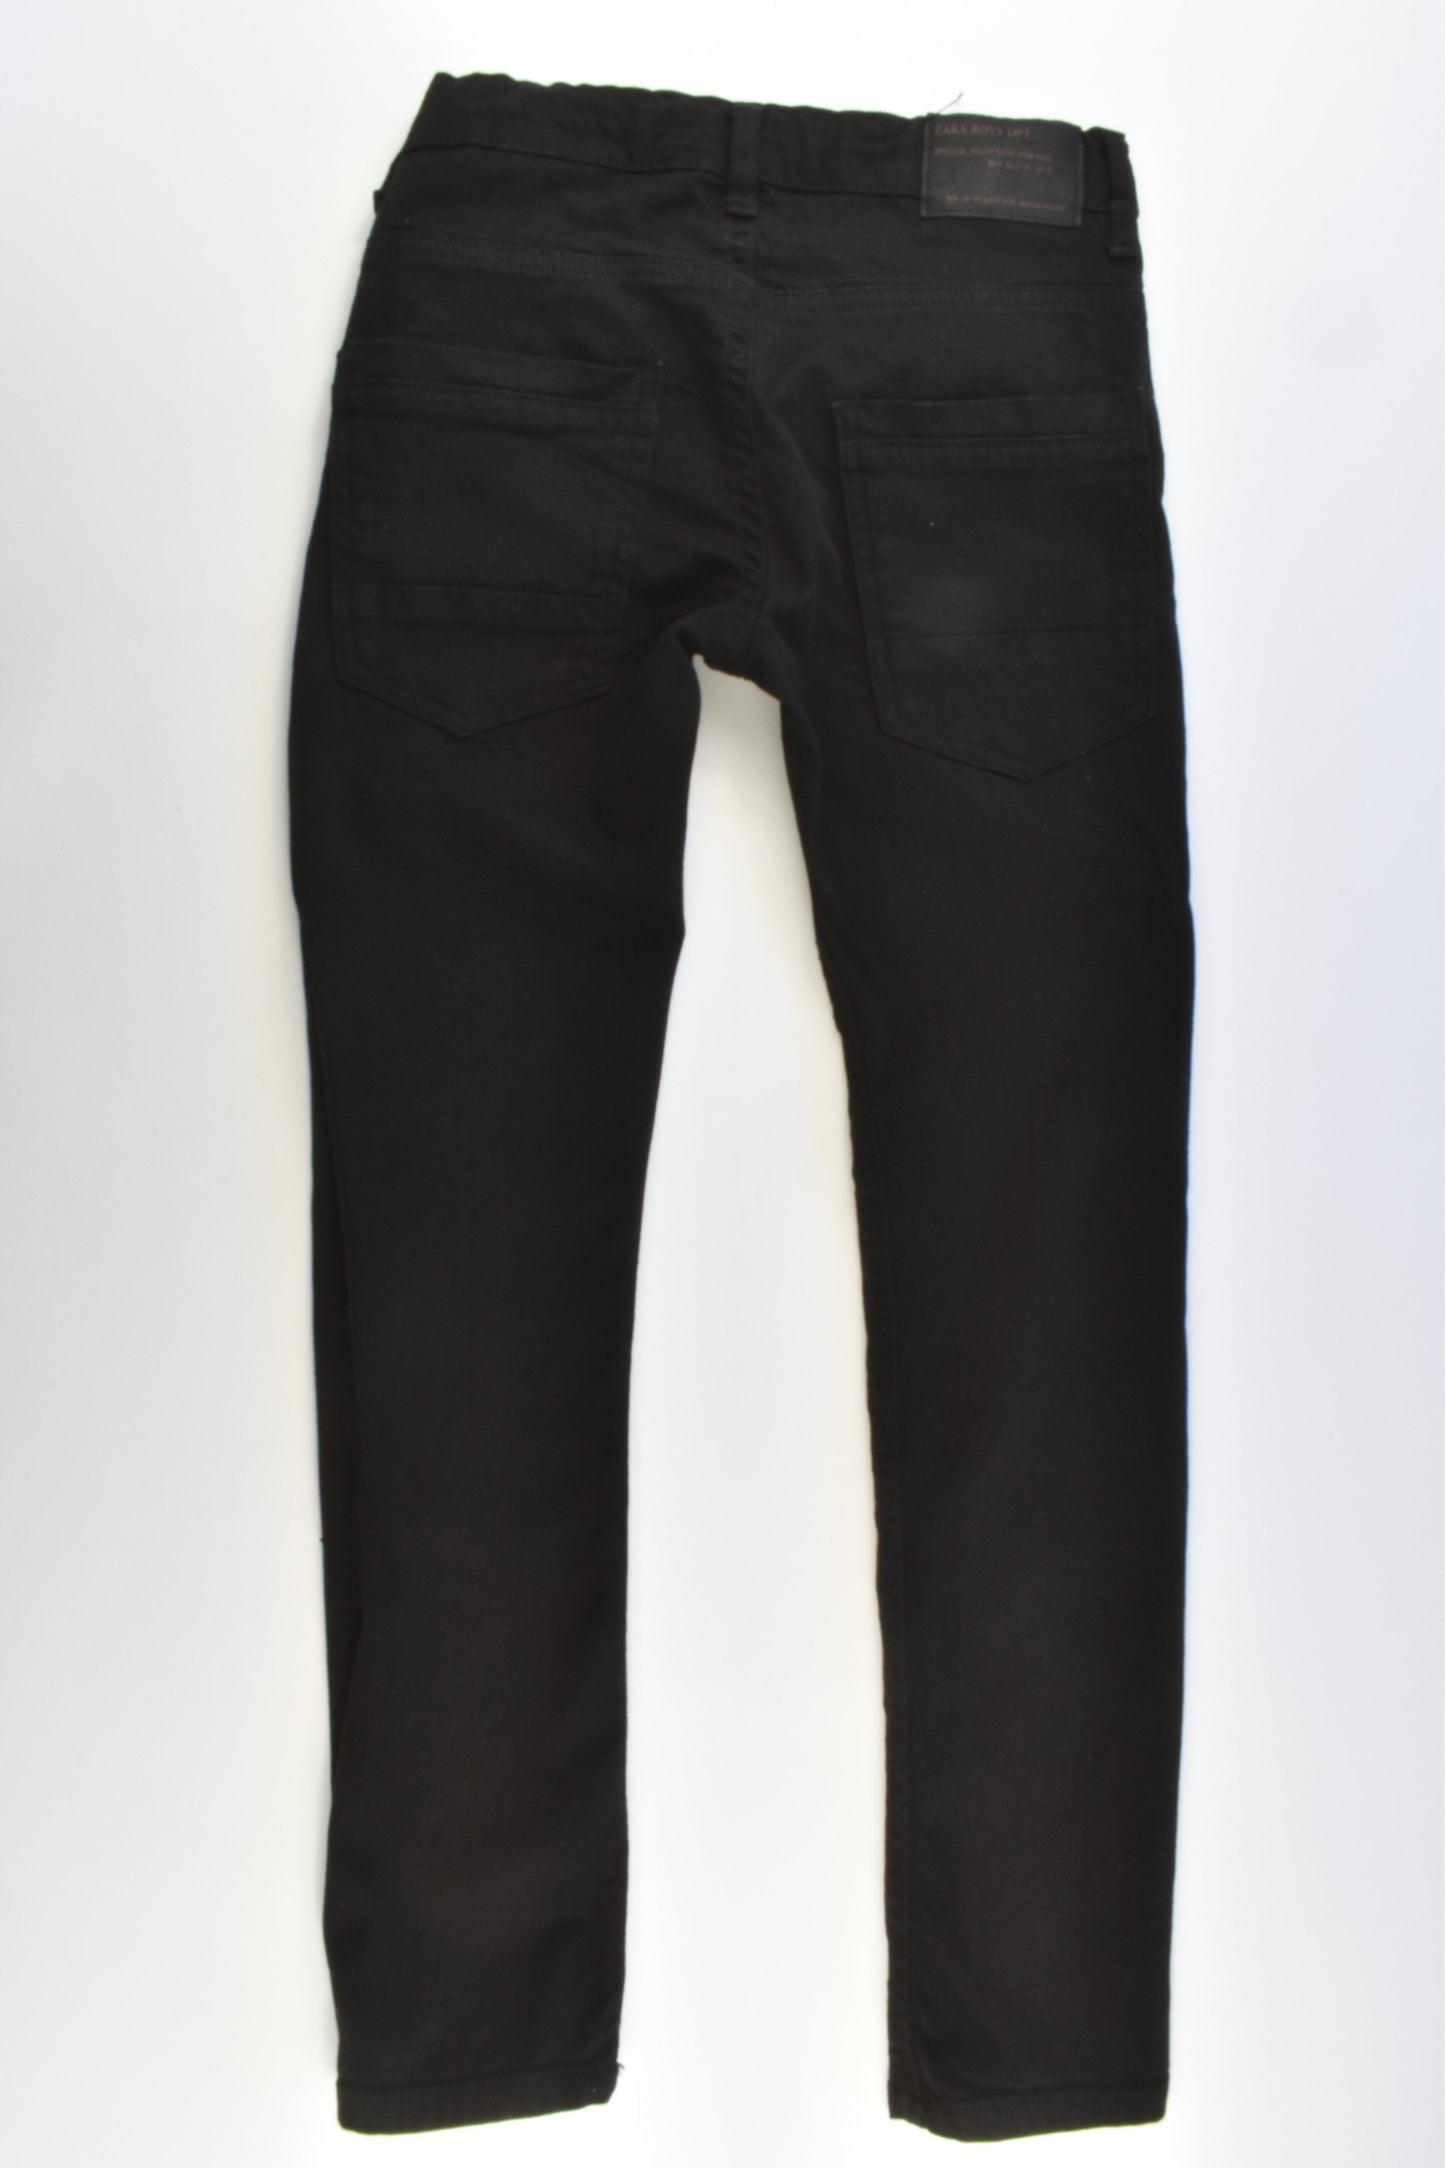 Zara Size 8 Stretchy Black Denim Pants